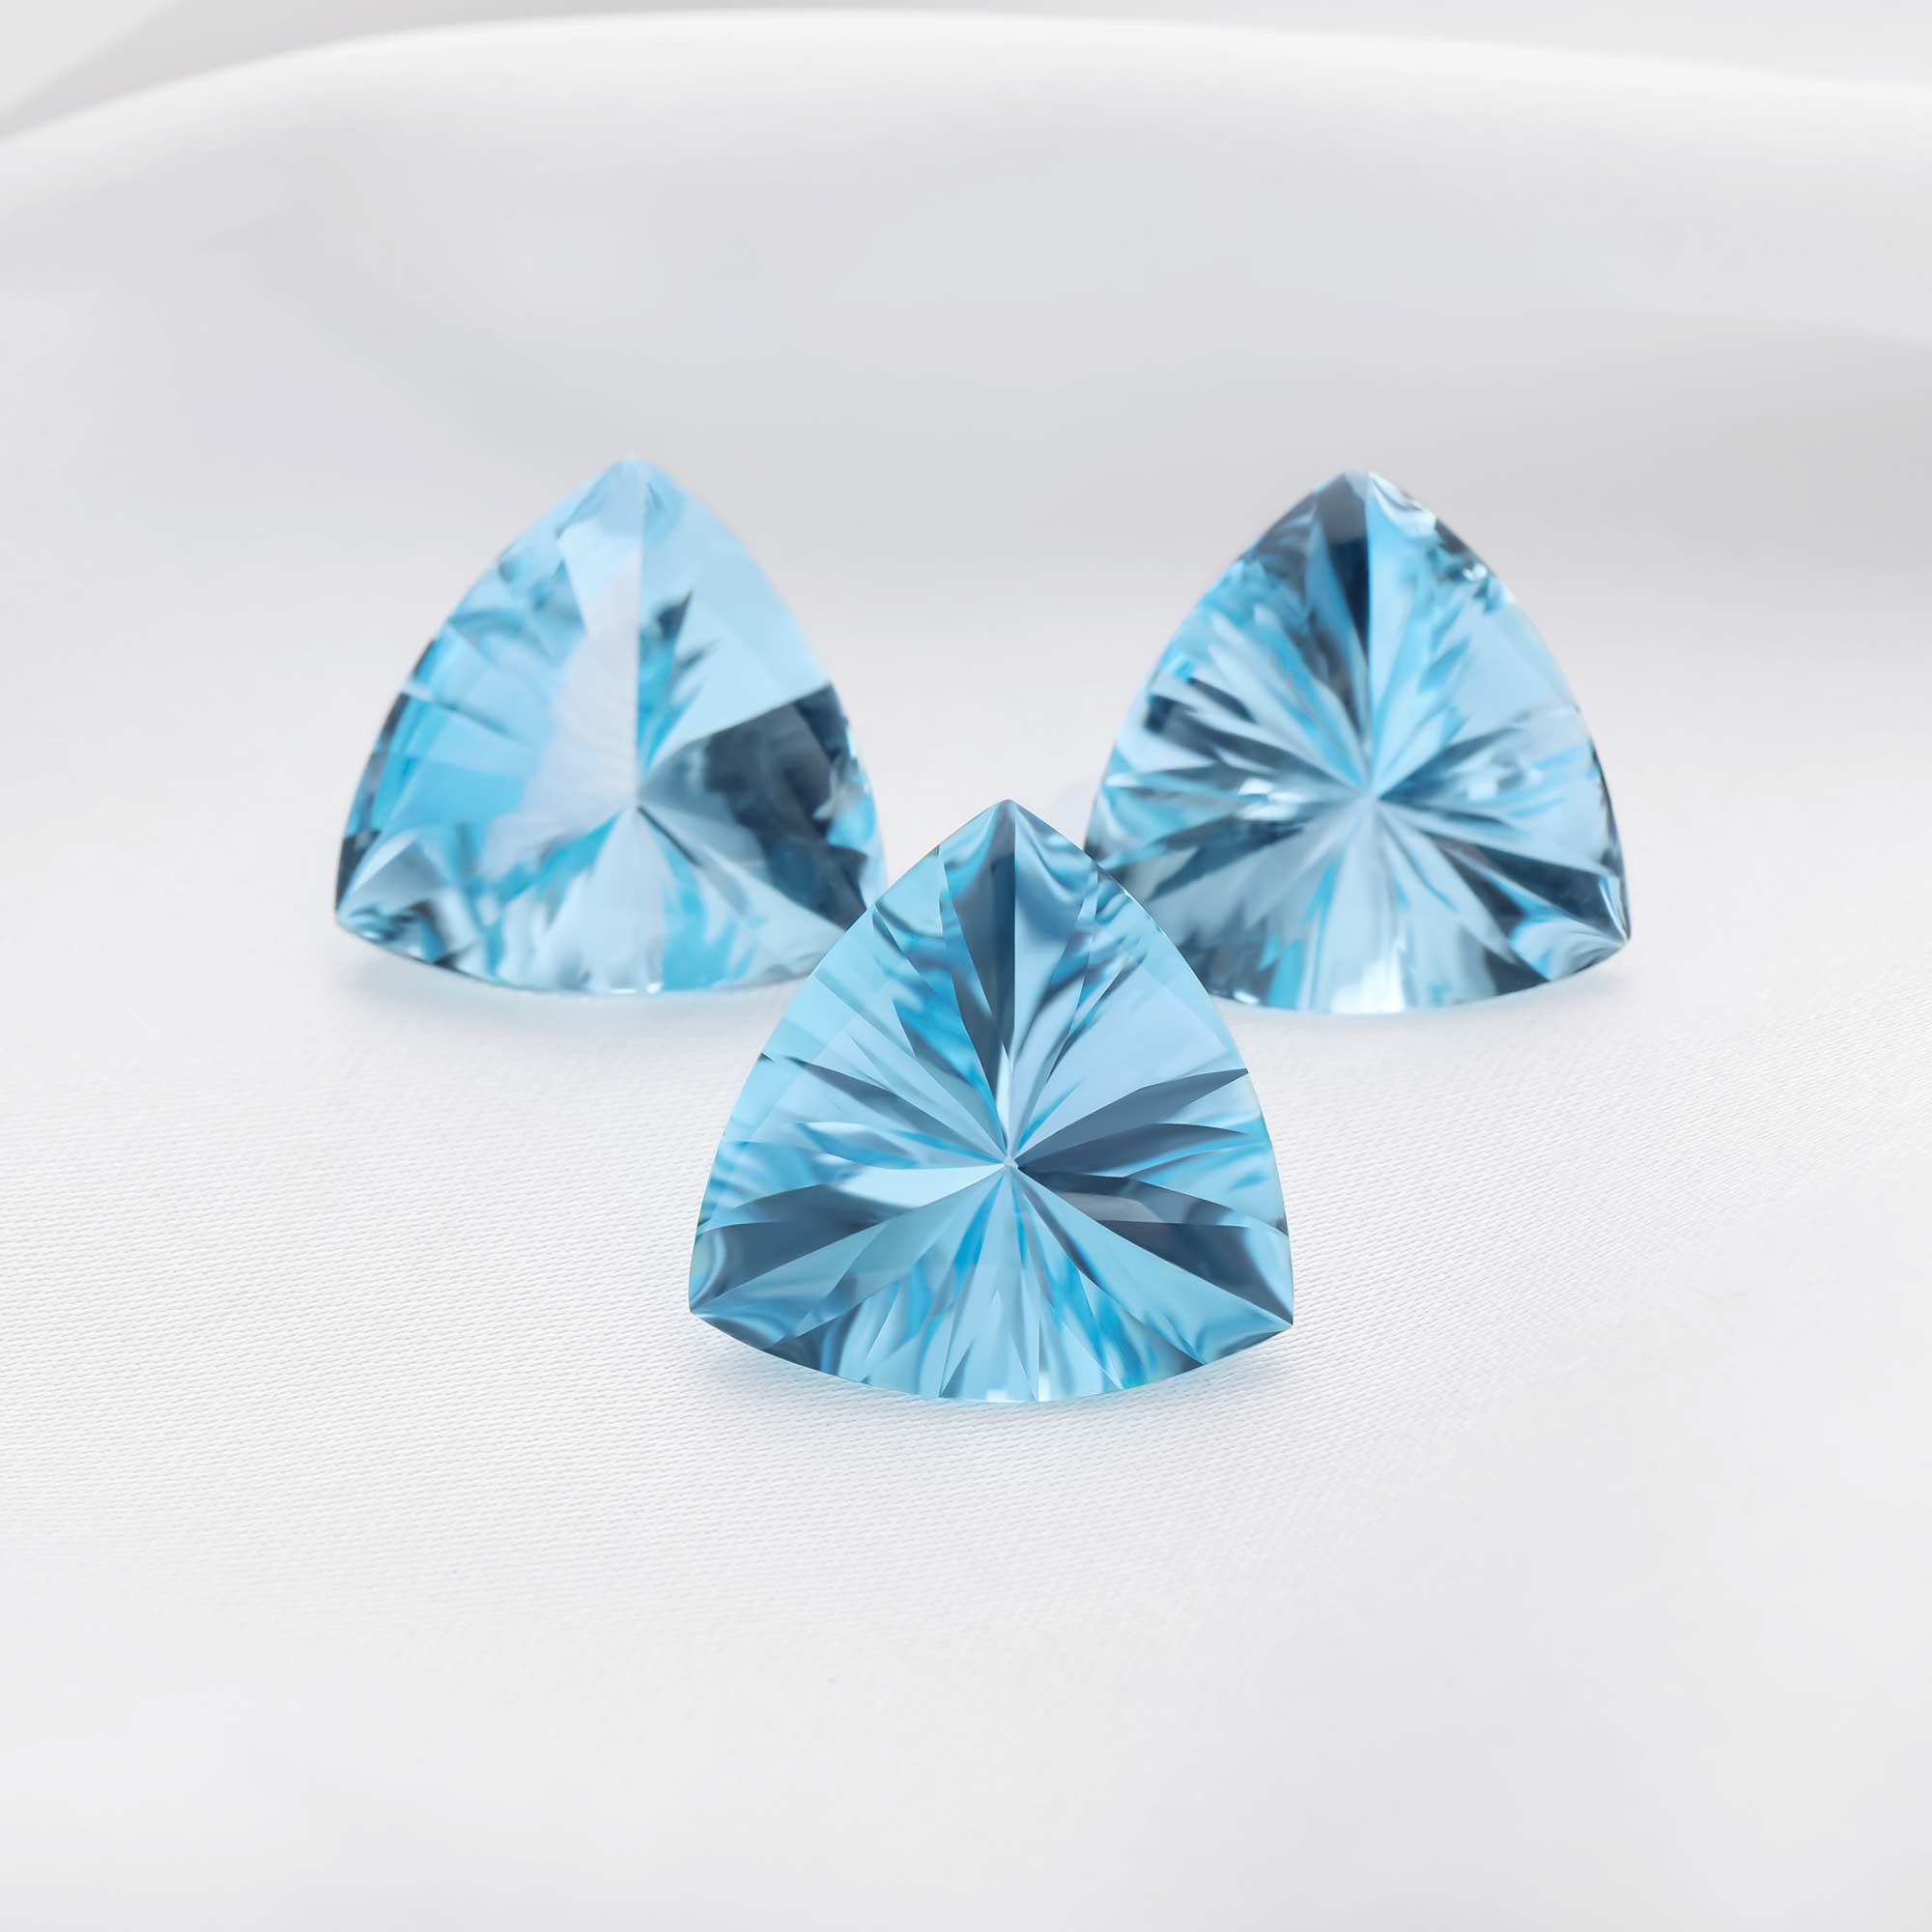 Large Trillion Cut Nature Swiss Blue Topaz Gemstone,November Birthstone,Blue Triangle Gemstone,DIY Jewelry Supplies - Click Image to Close